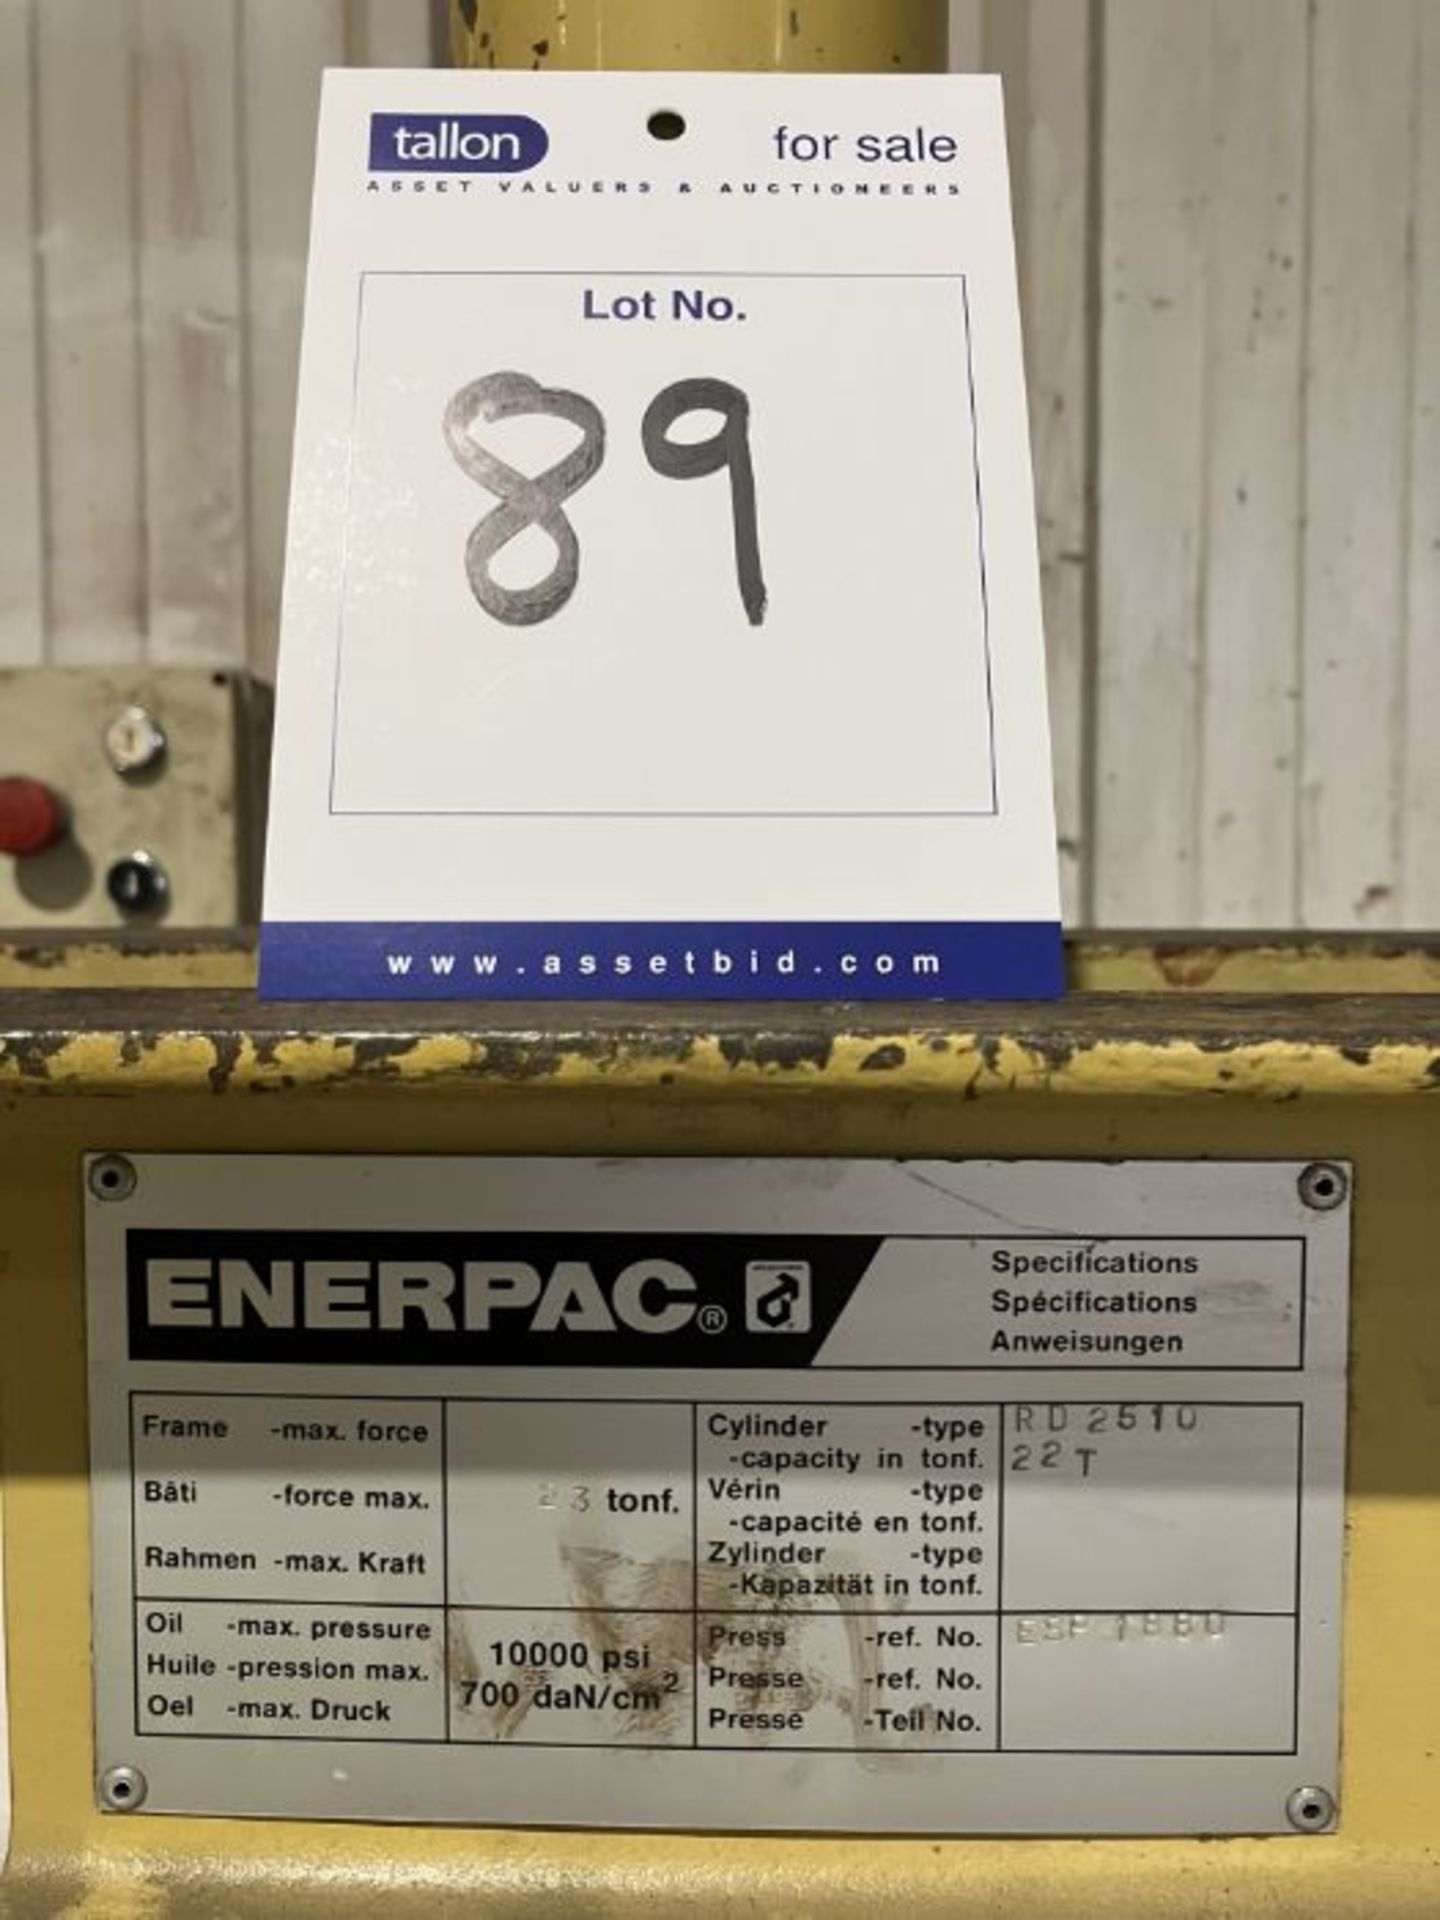 Ennerpac type RD 2510 (22 tonne capacity) garage press - Image 2 of 4